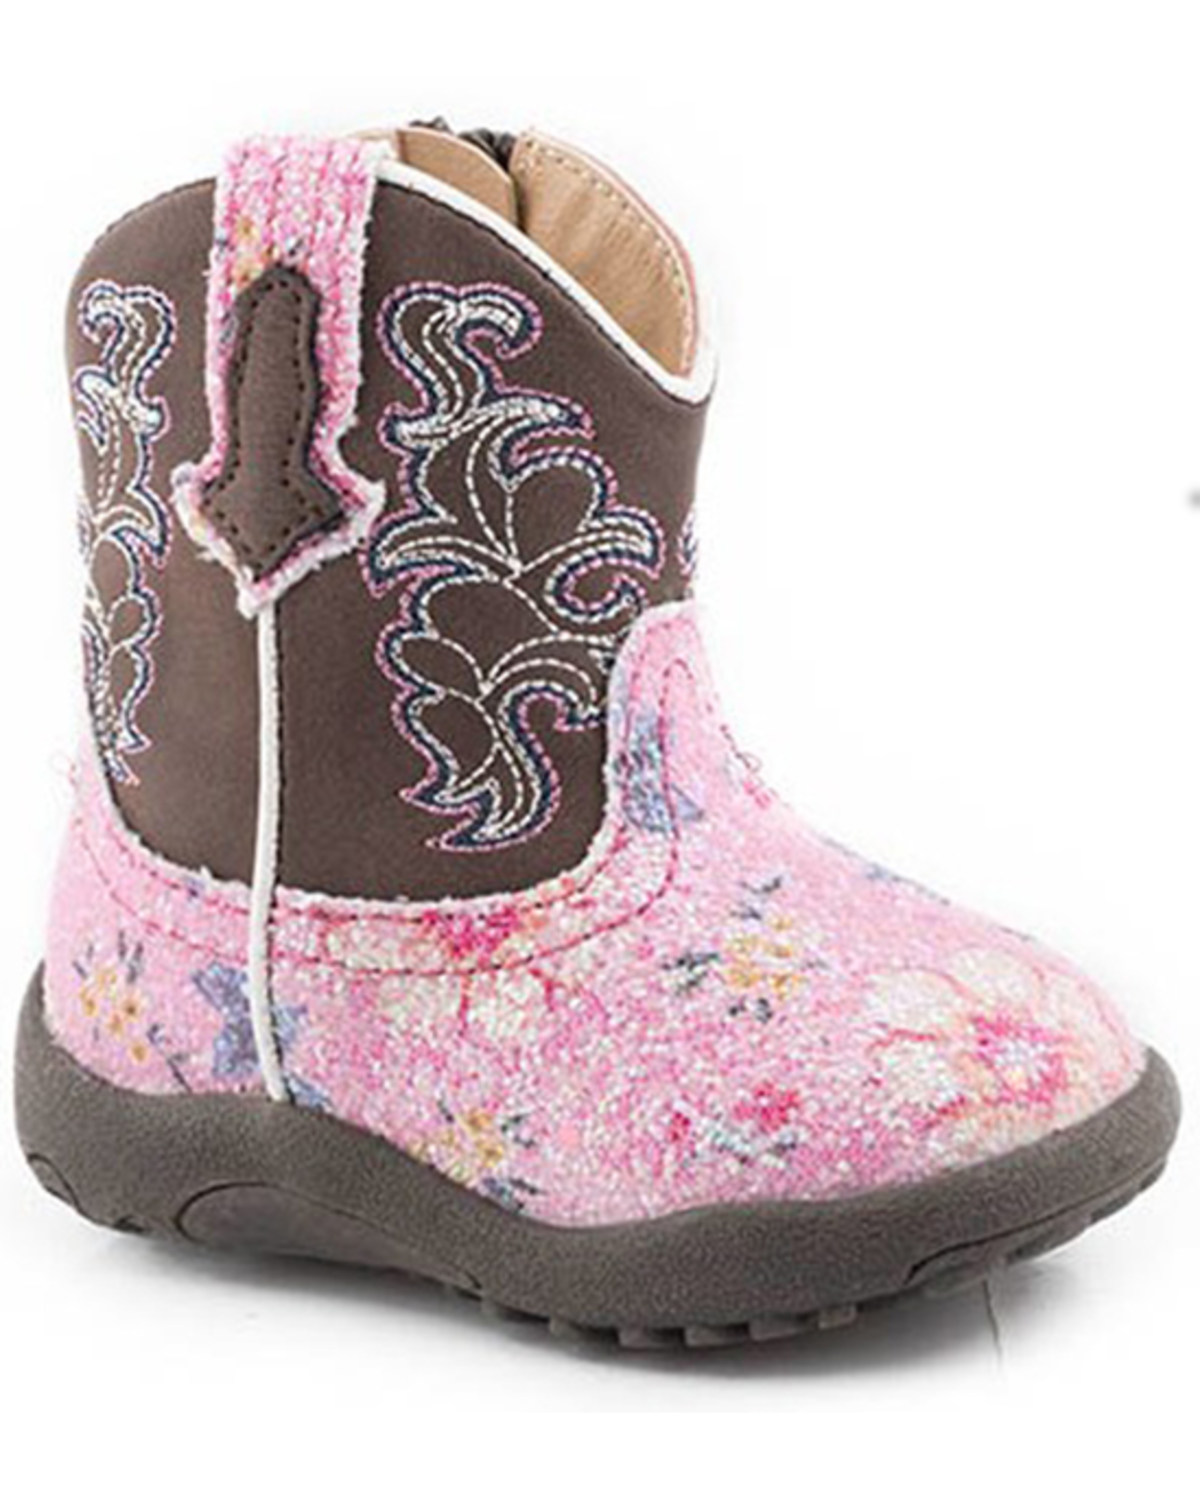 Roper Infant Girls' Glitter Flower Western Boots - Round Toe